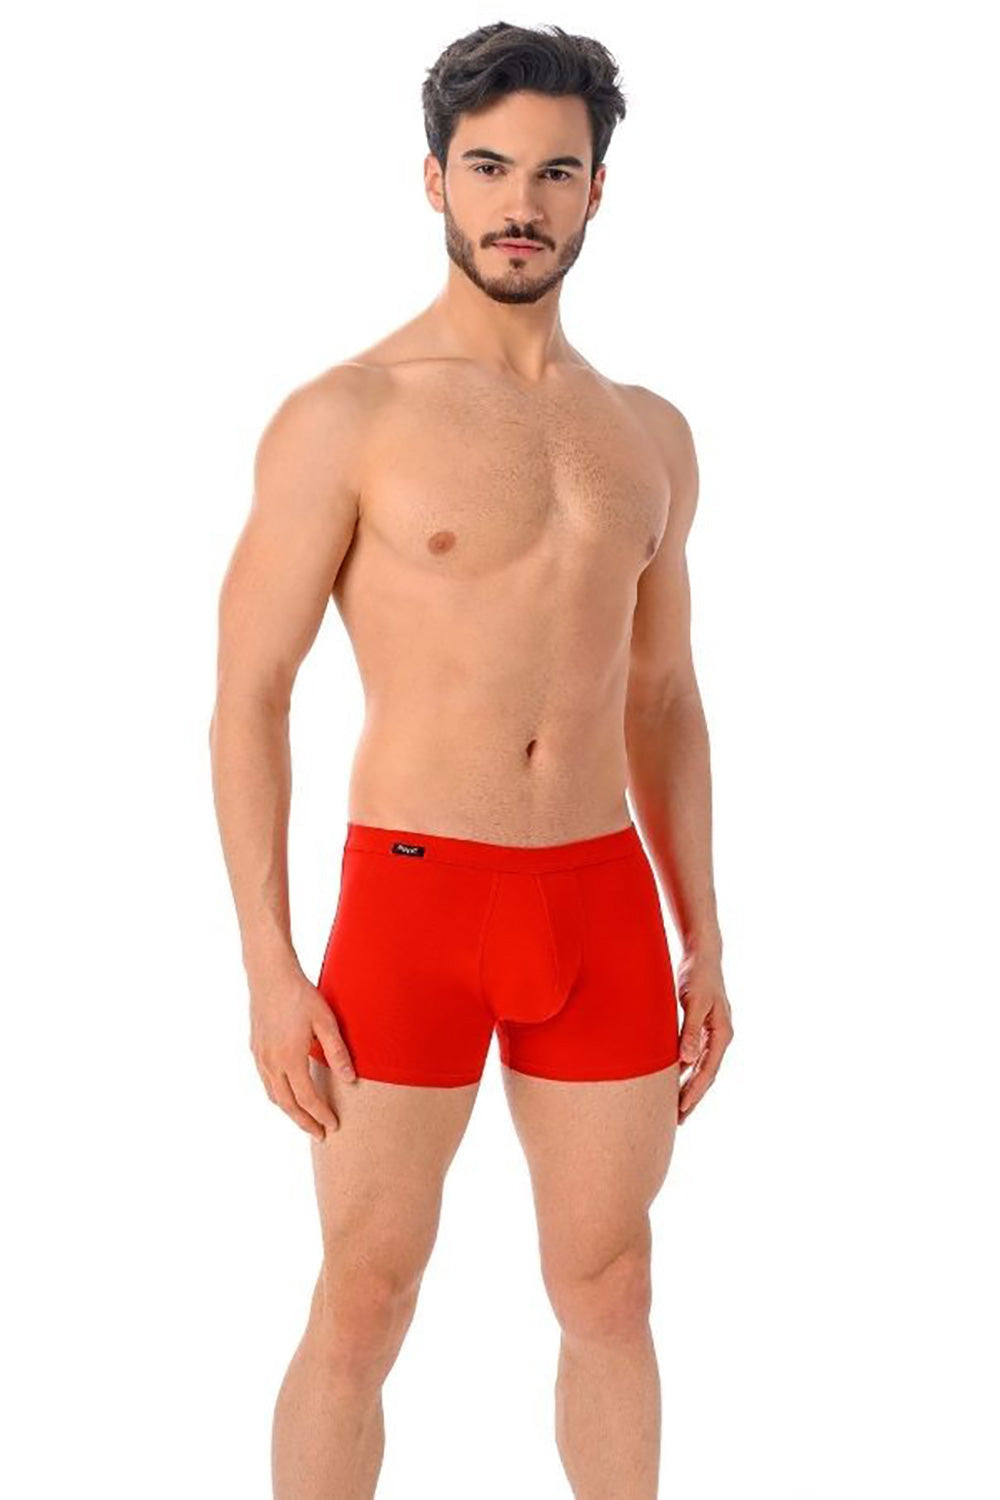 Set model 182972 Elsy Style Boxers Shorts, Slips, Swimming Briefs for Men